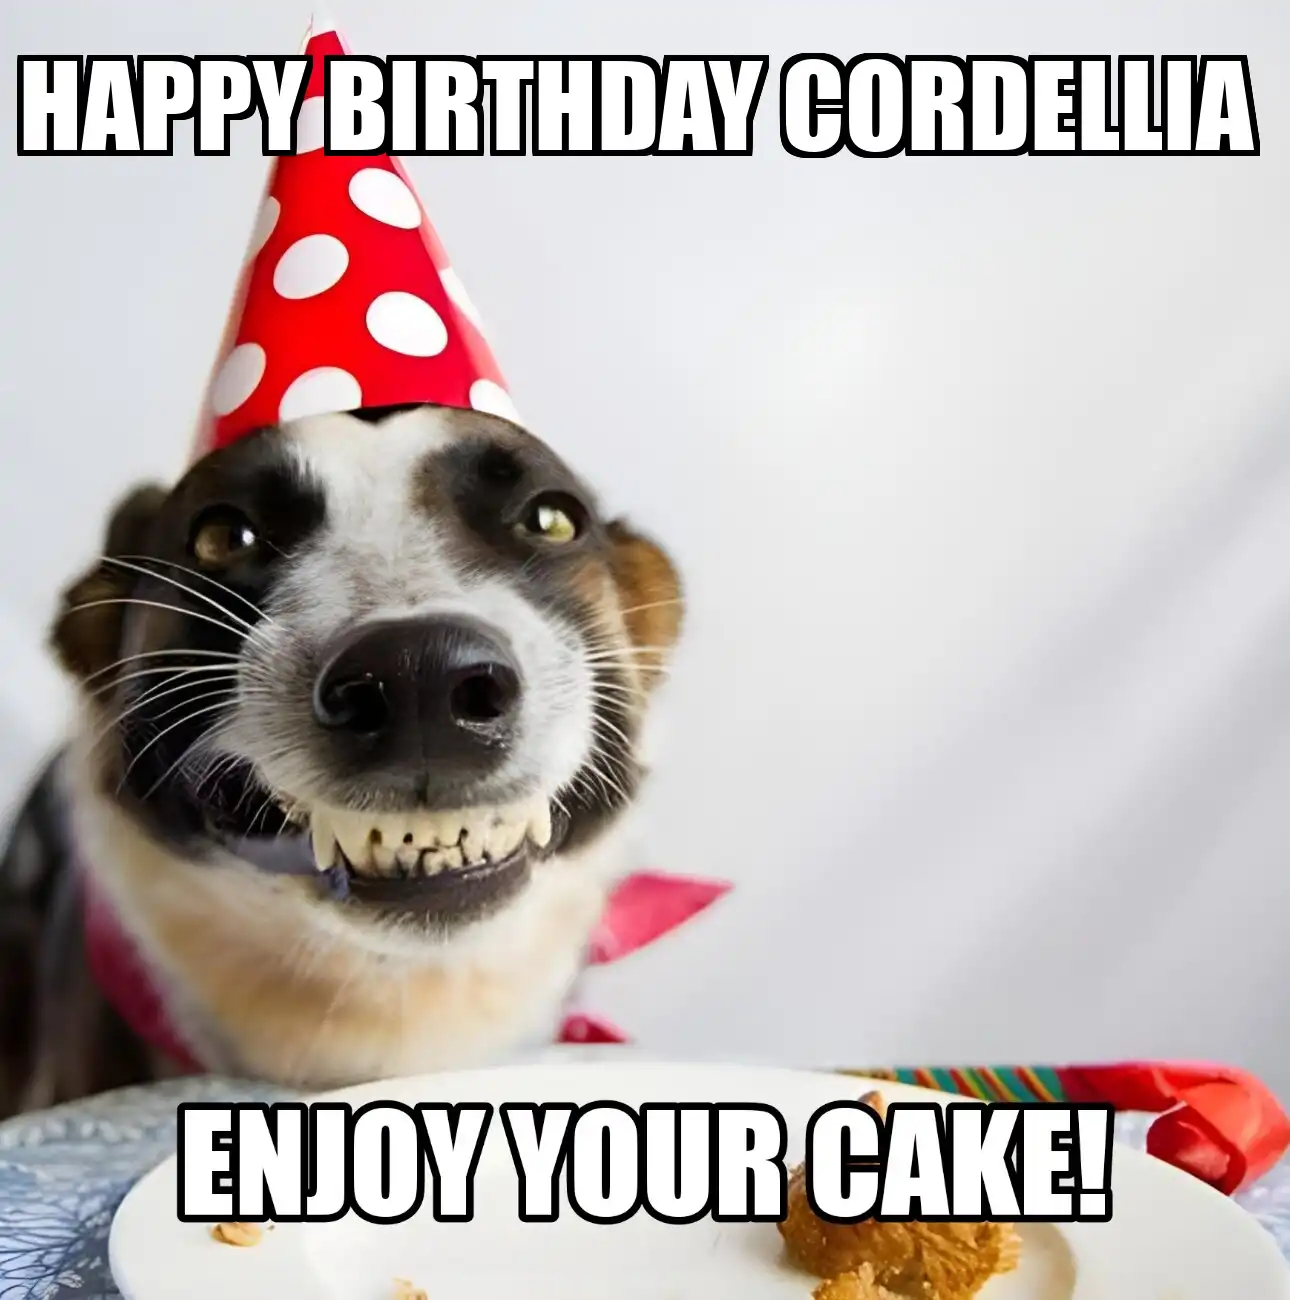 Happy Birthday Cordellia Enjoy Your Cake Dog Meme